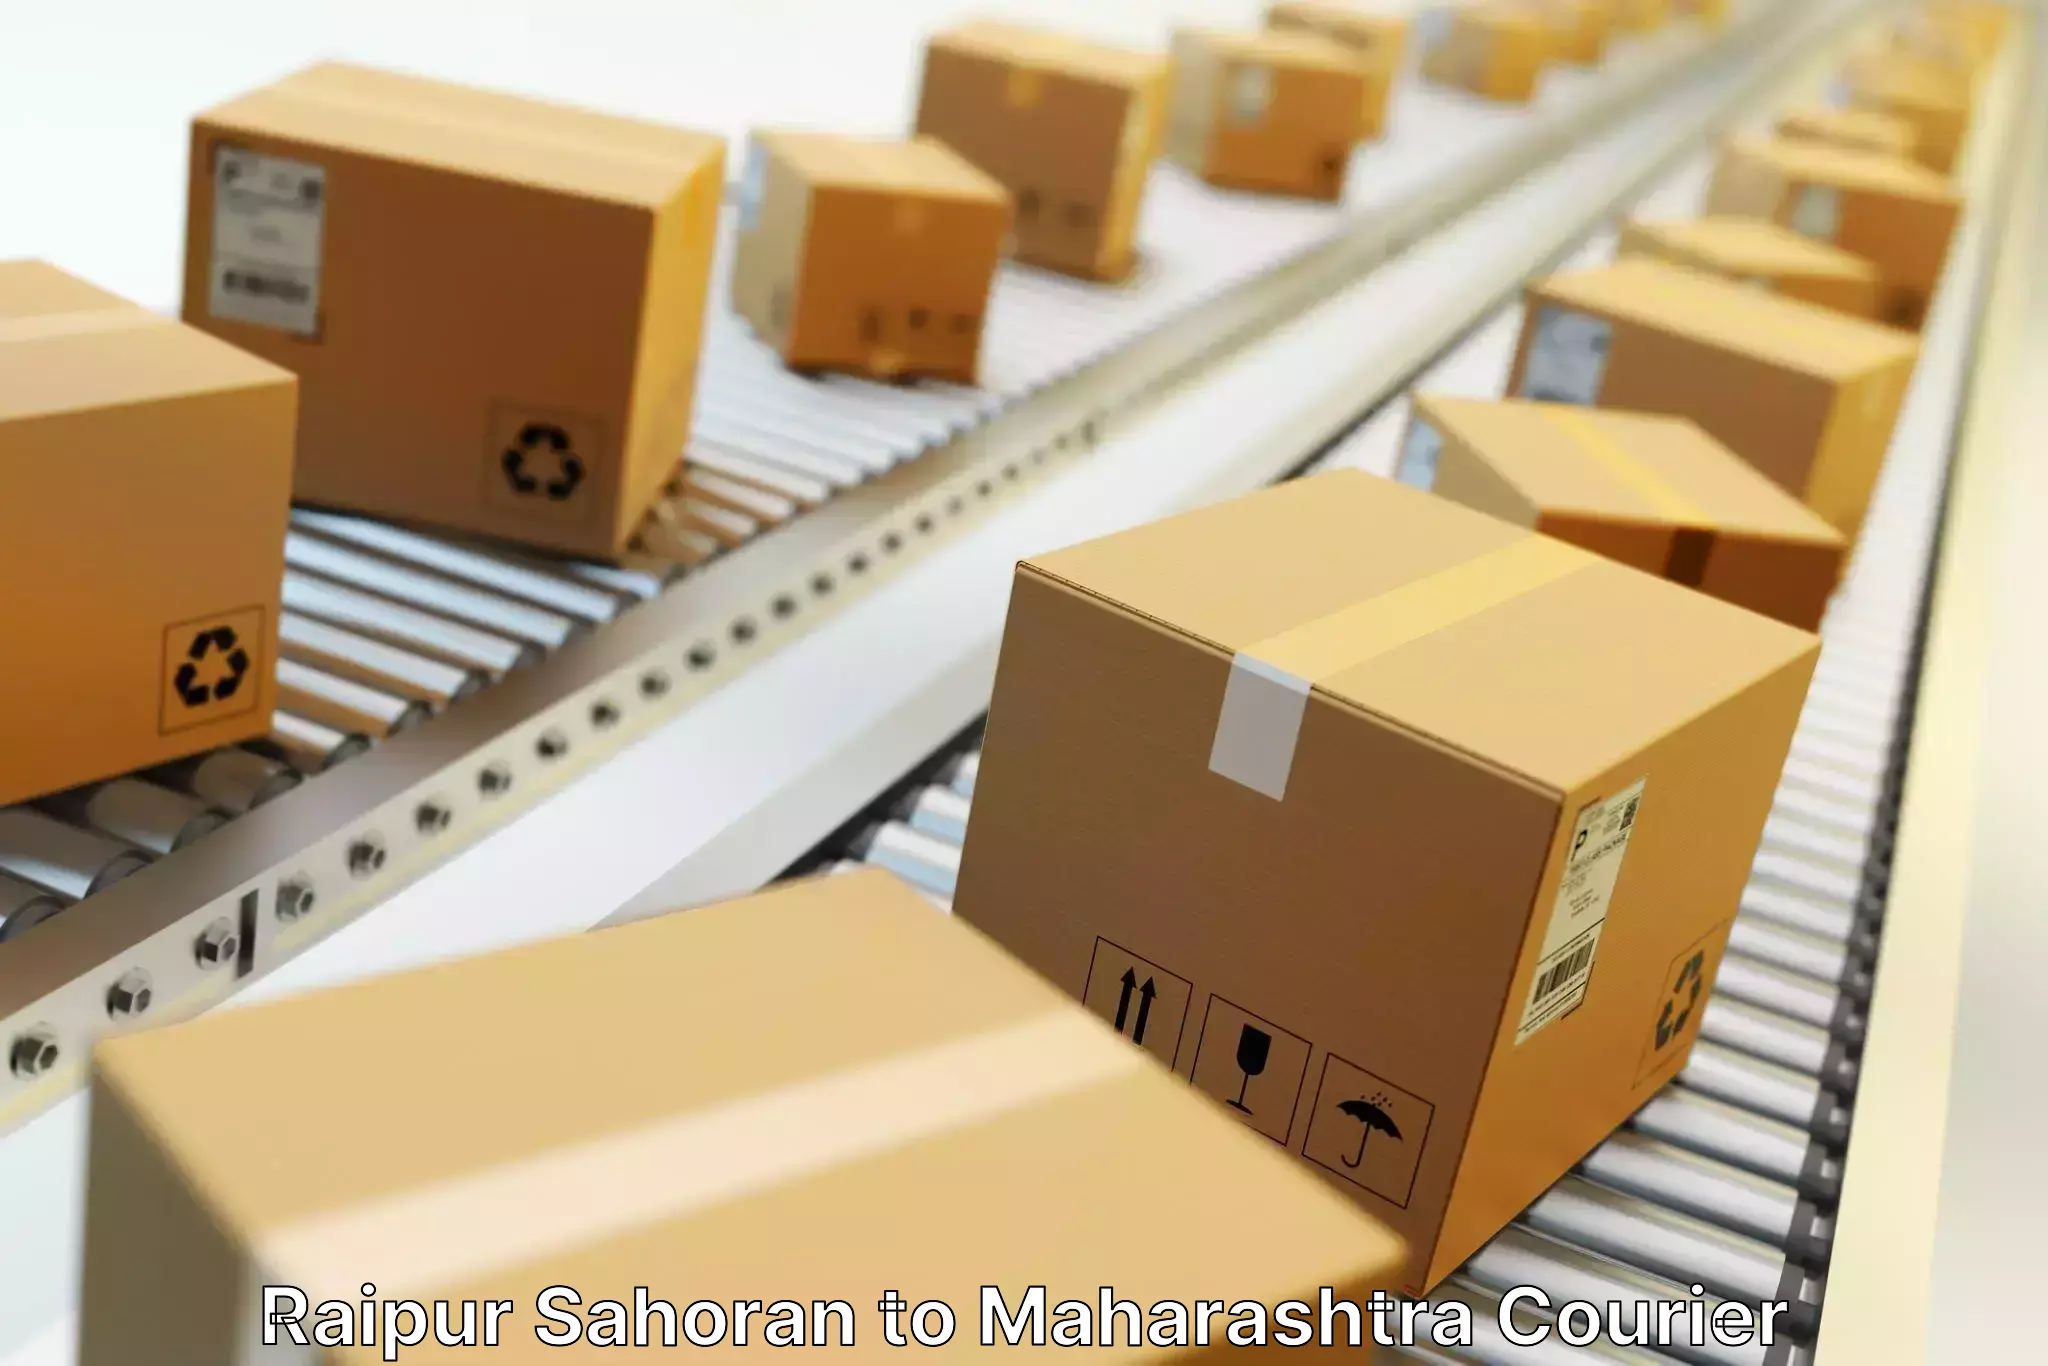 Package delivery network Raipur Sahoran to Malegaon